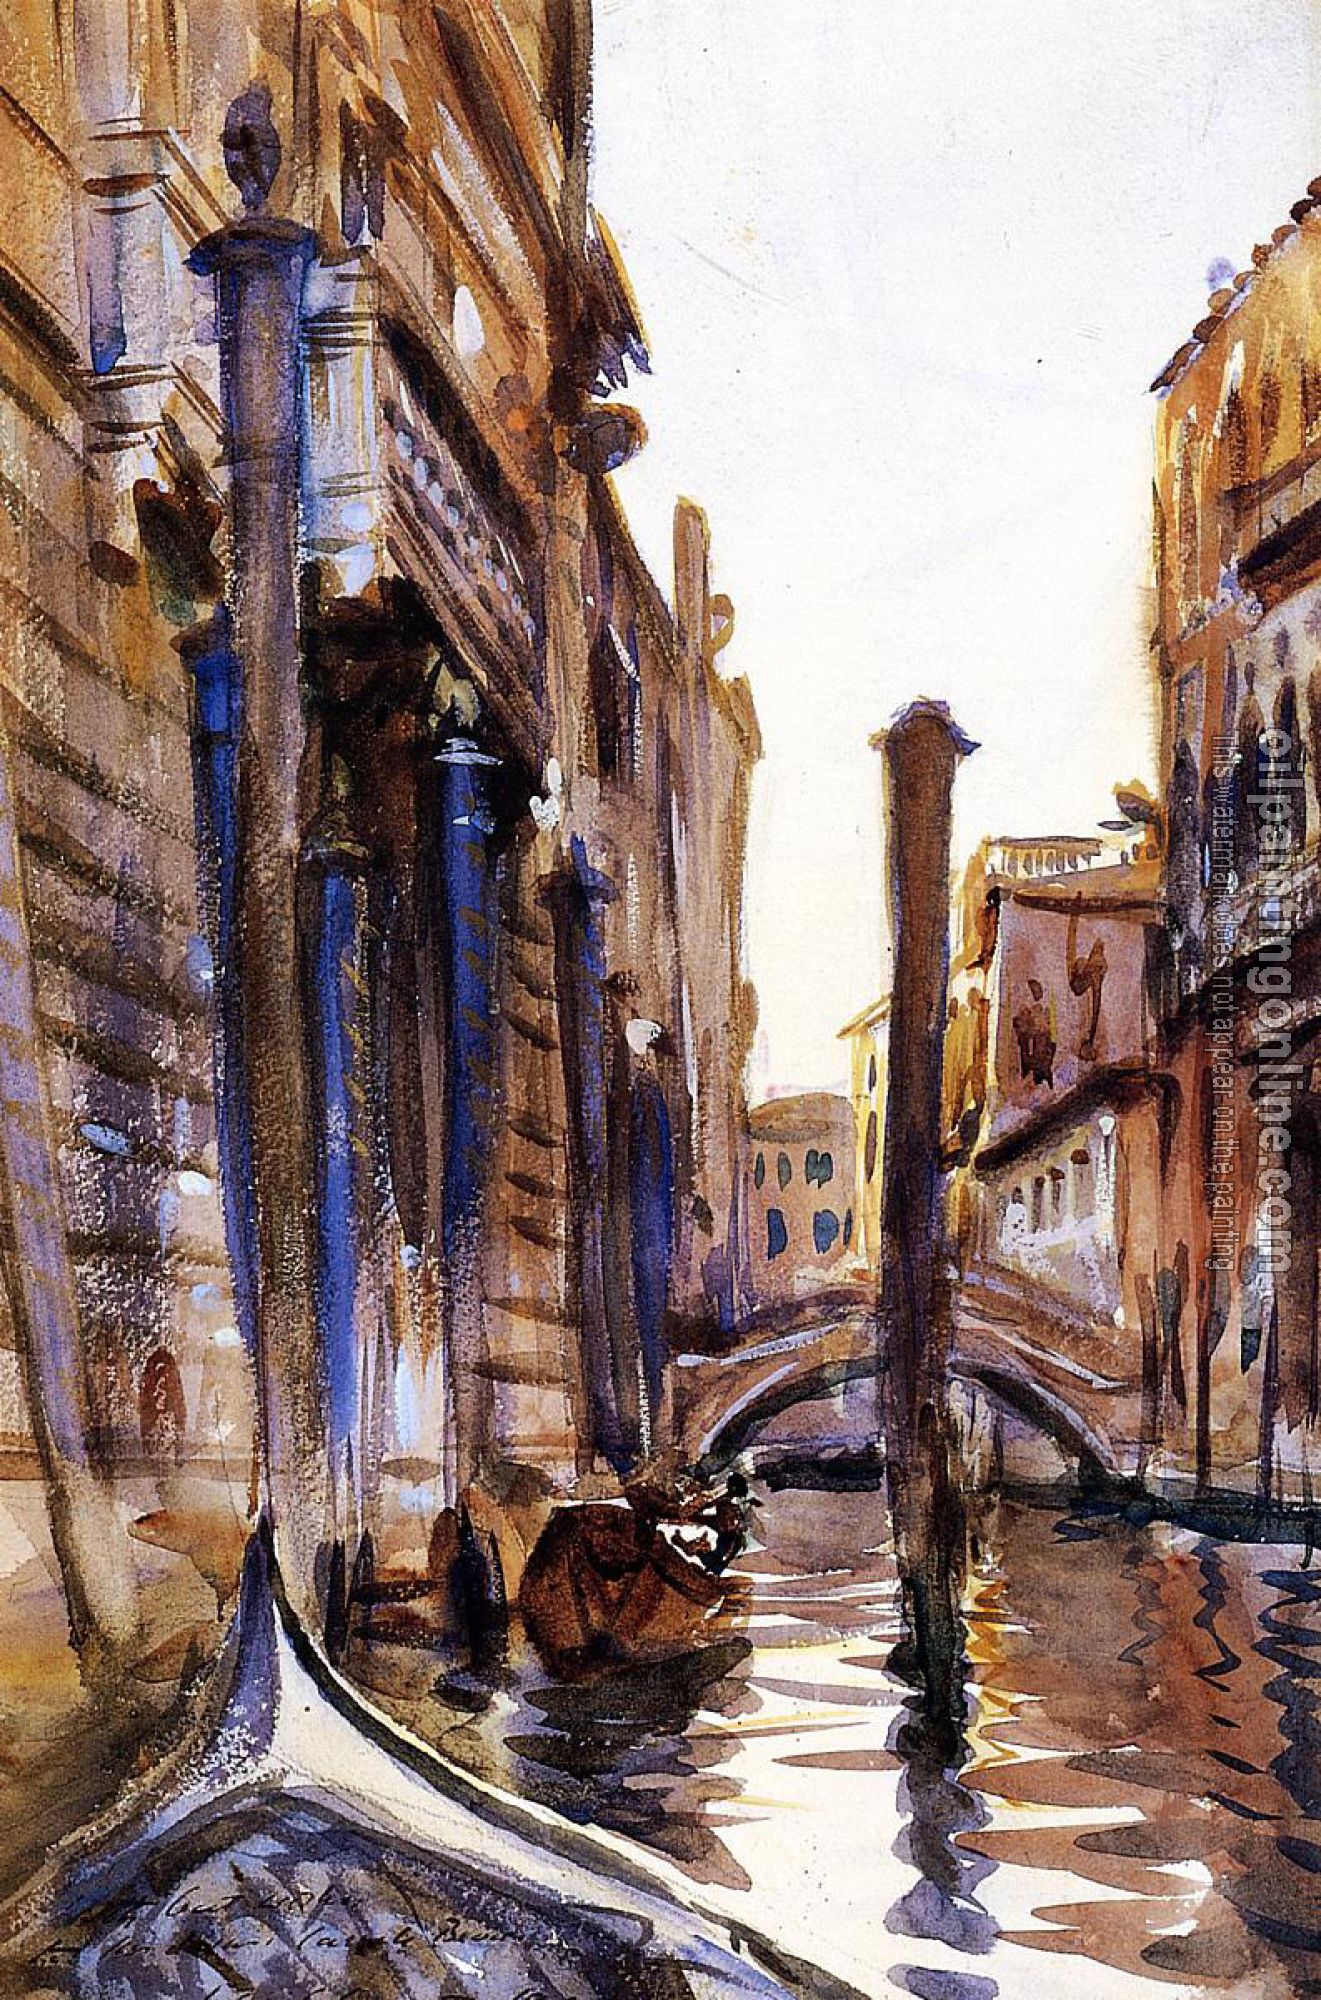 Sargent, John Singer - Side Canal in Venice